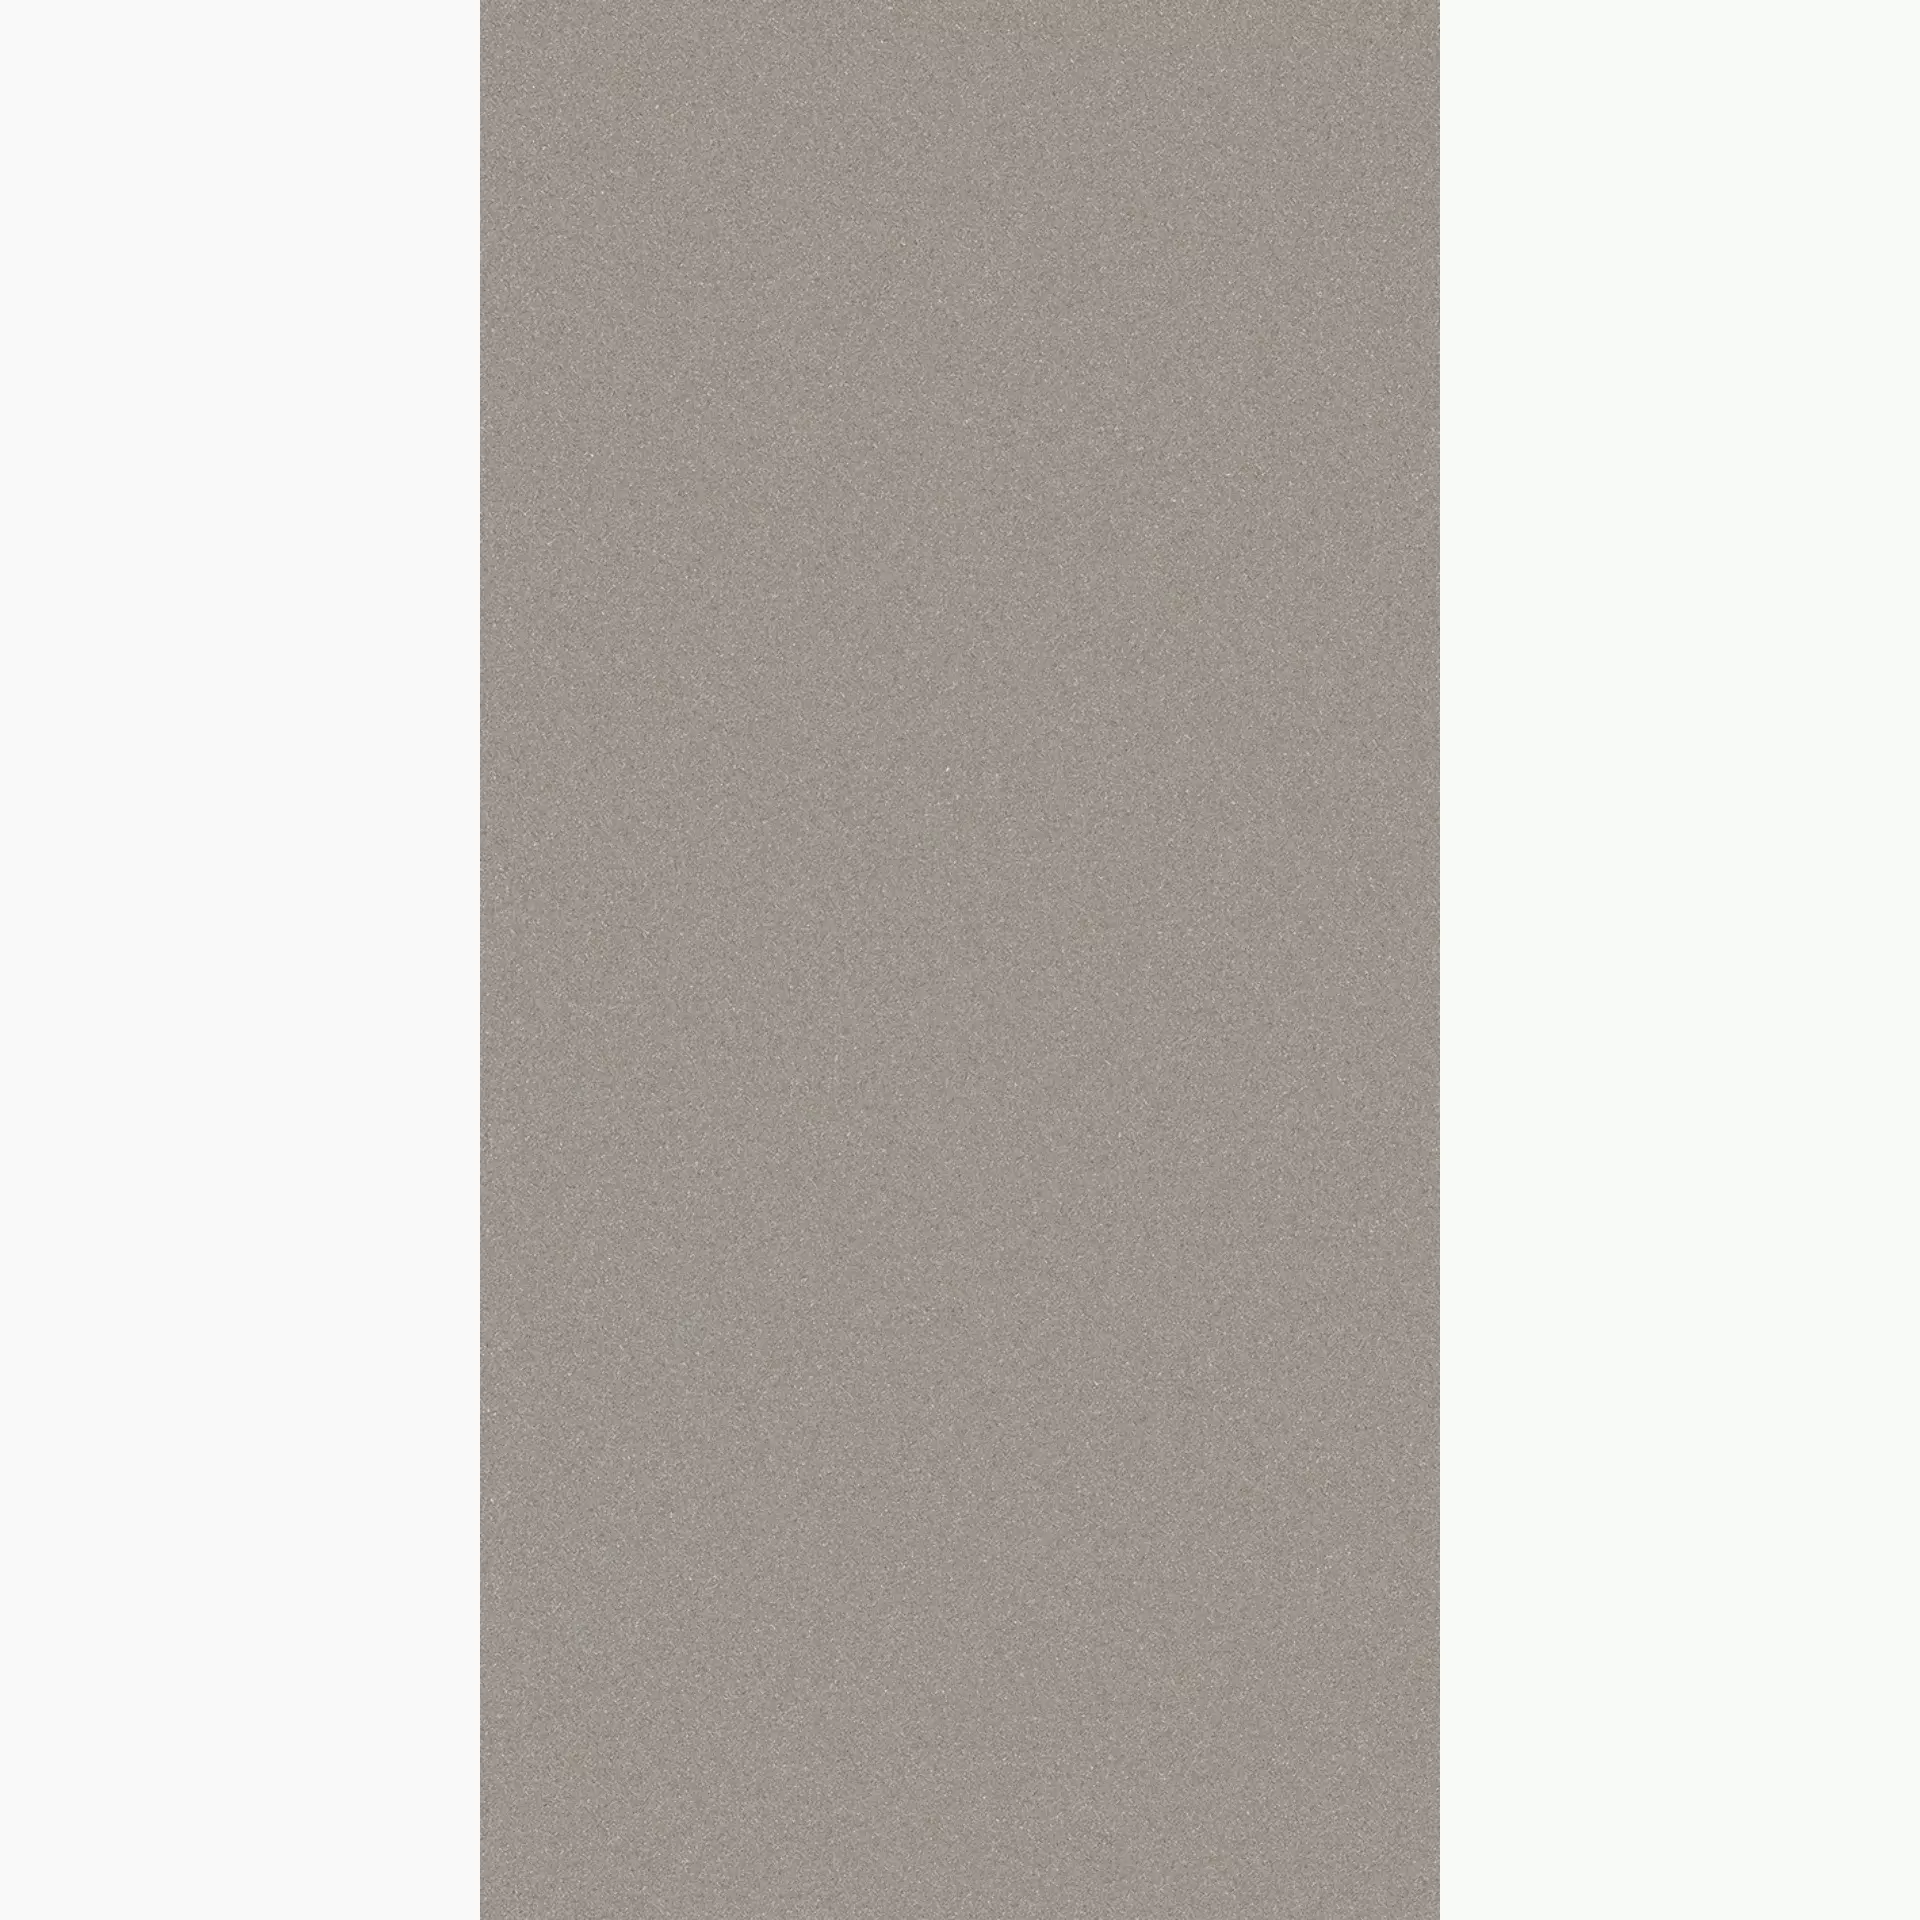 Villeroy & Boch Pure Line 2.0 Cement Grey Matt 2751-UL61 60x120cm rectified 12mm